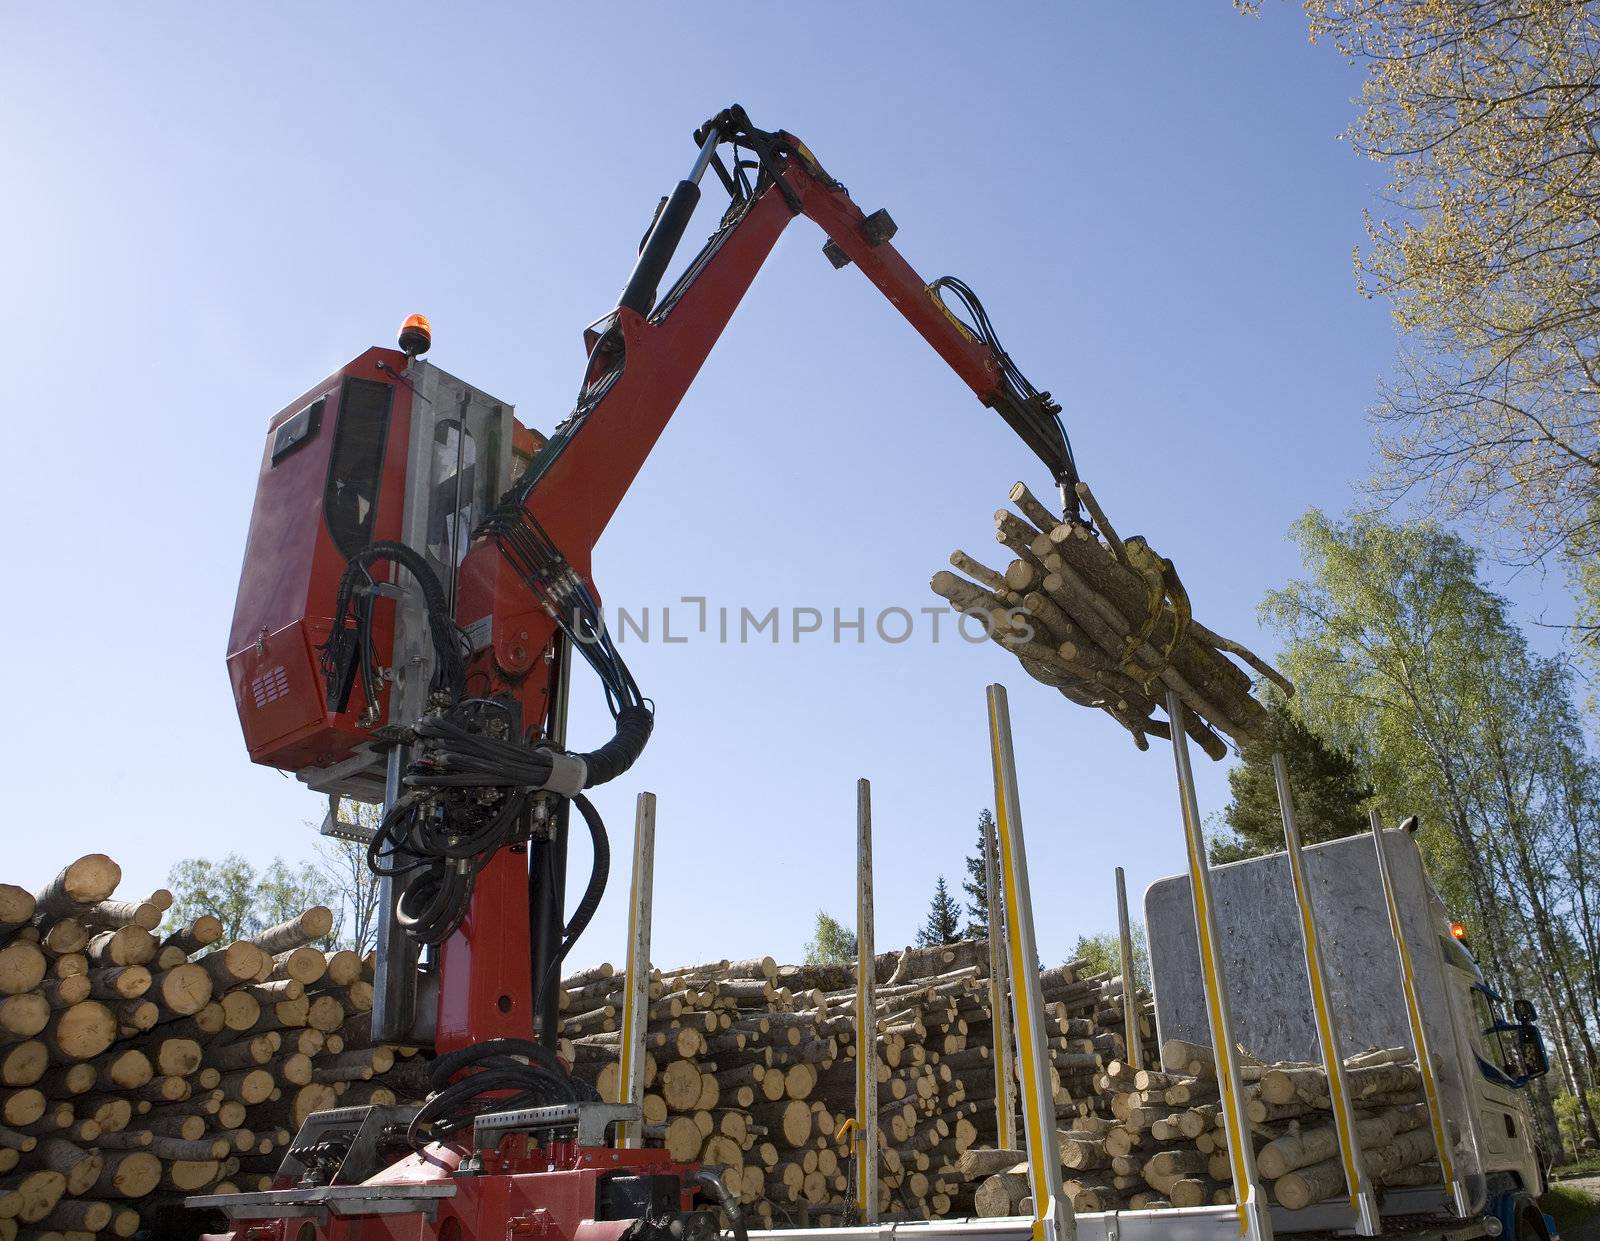 Loading Timber by gemenacom